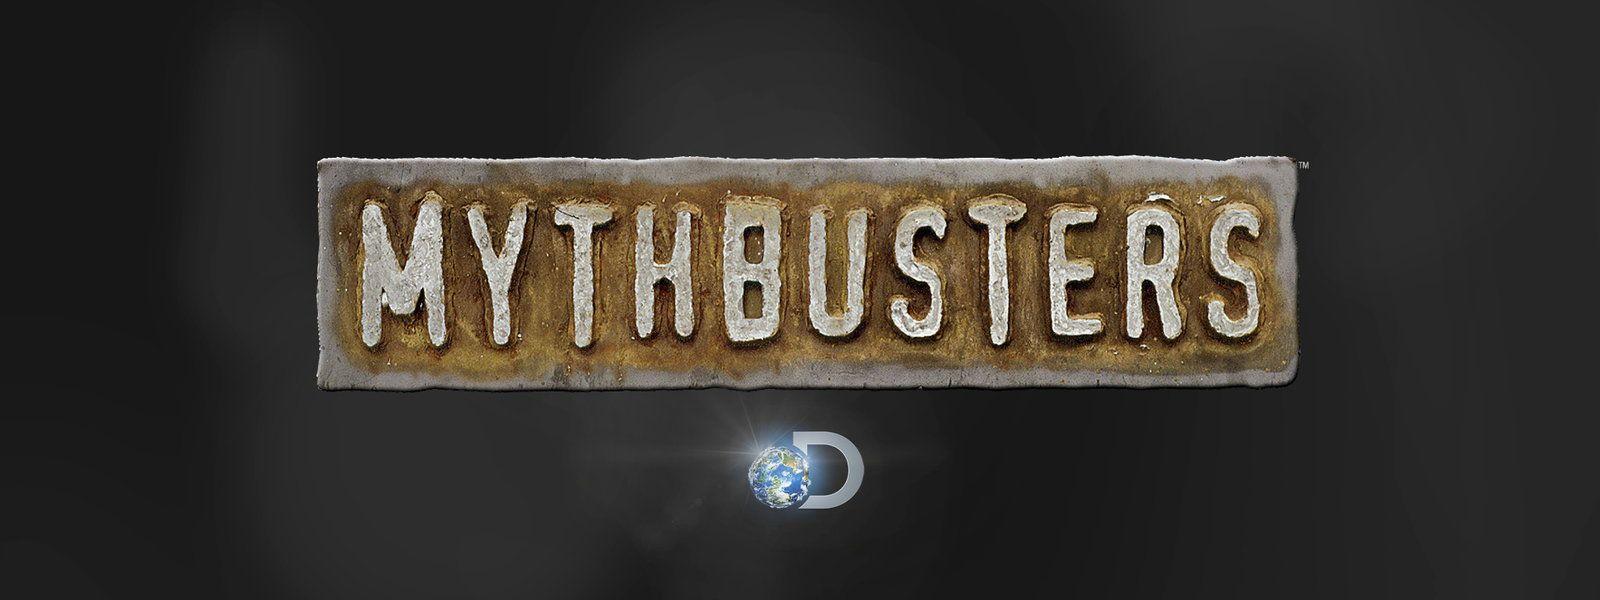 Mythbusters Logo - Mythbusters Logo